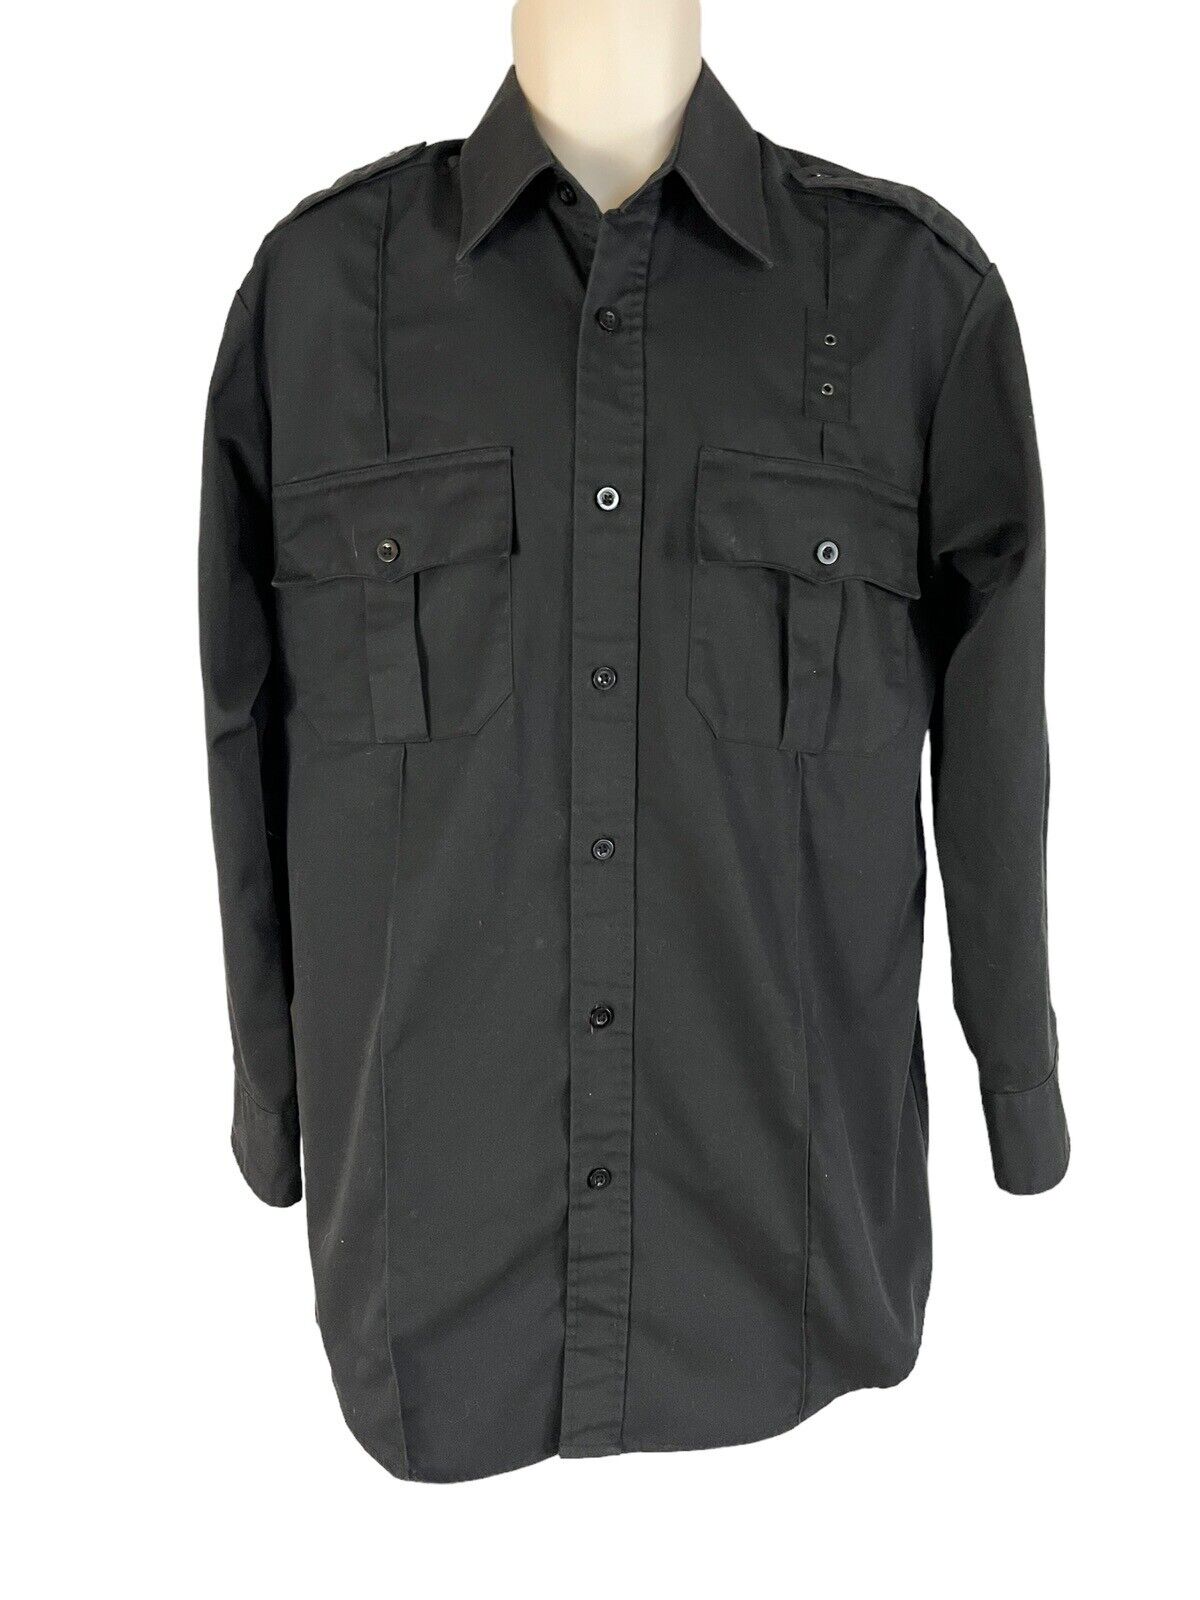 Galls Mens Large Uniform  Shirt Black Heavy Long Sleeve Button Up  Pockets